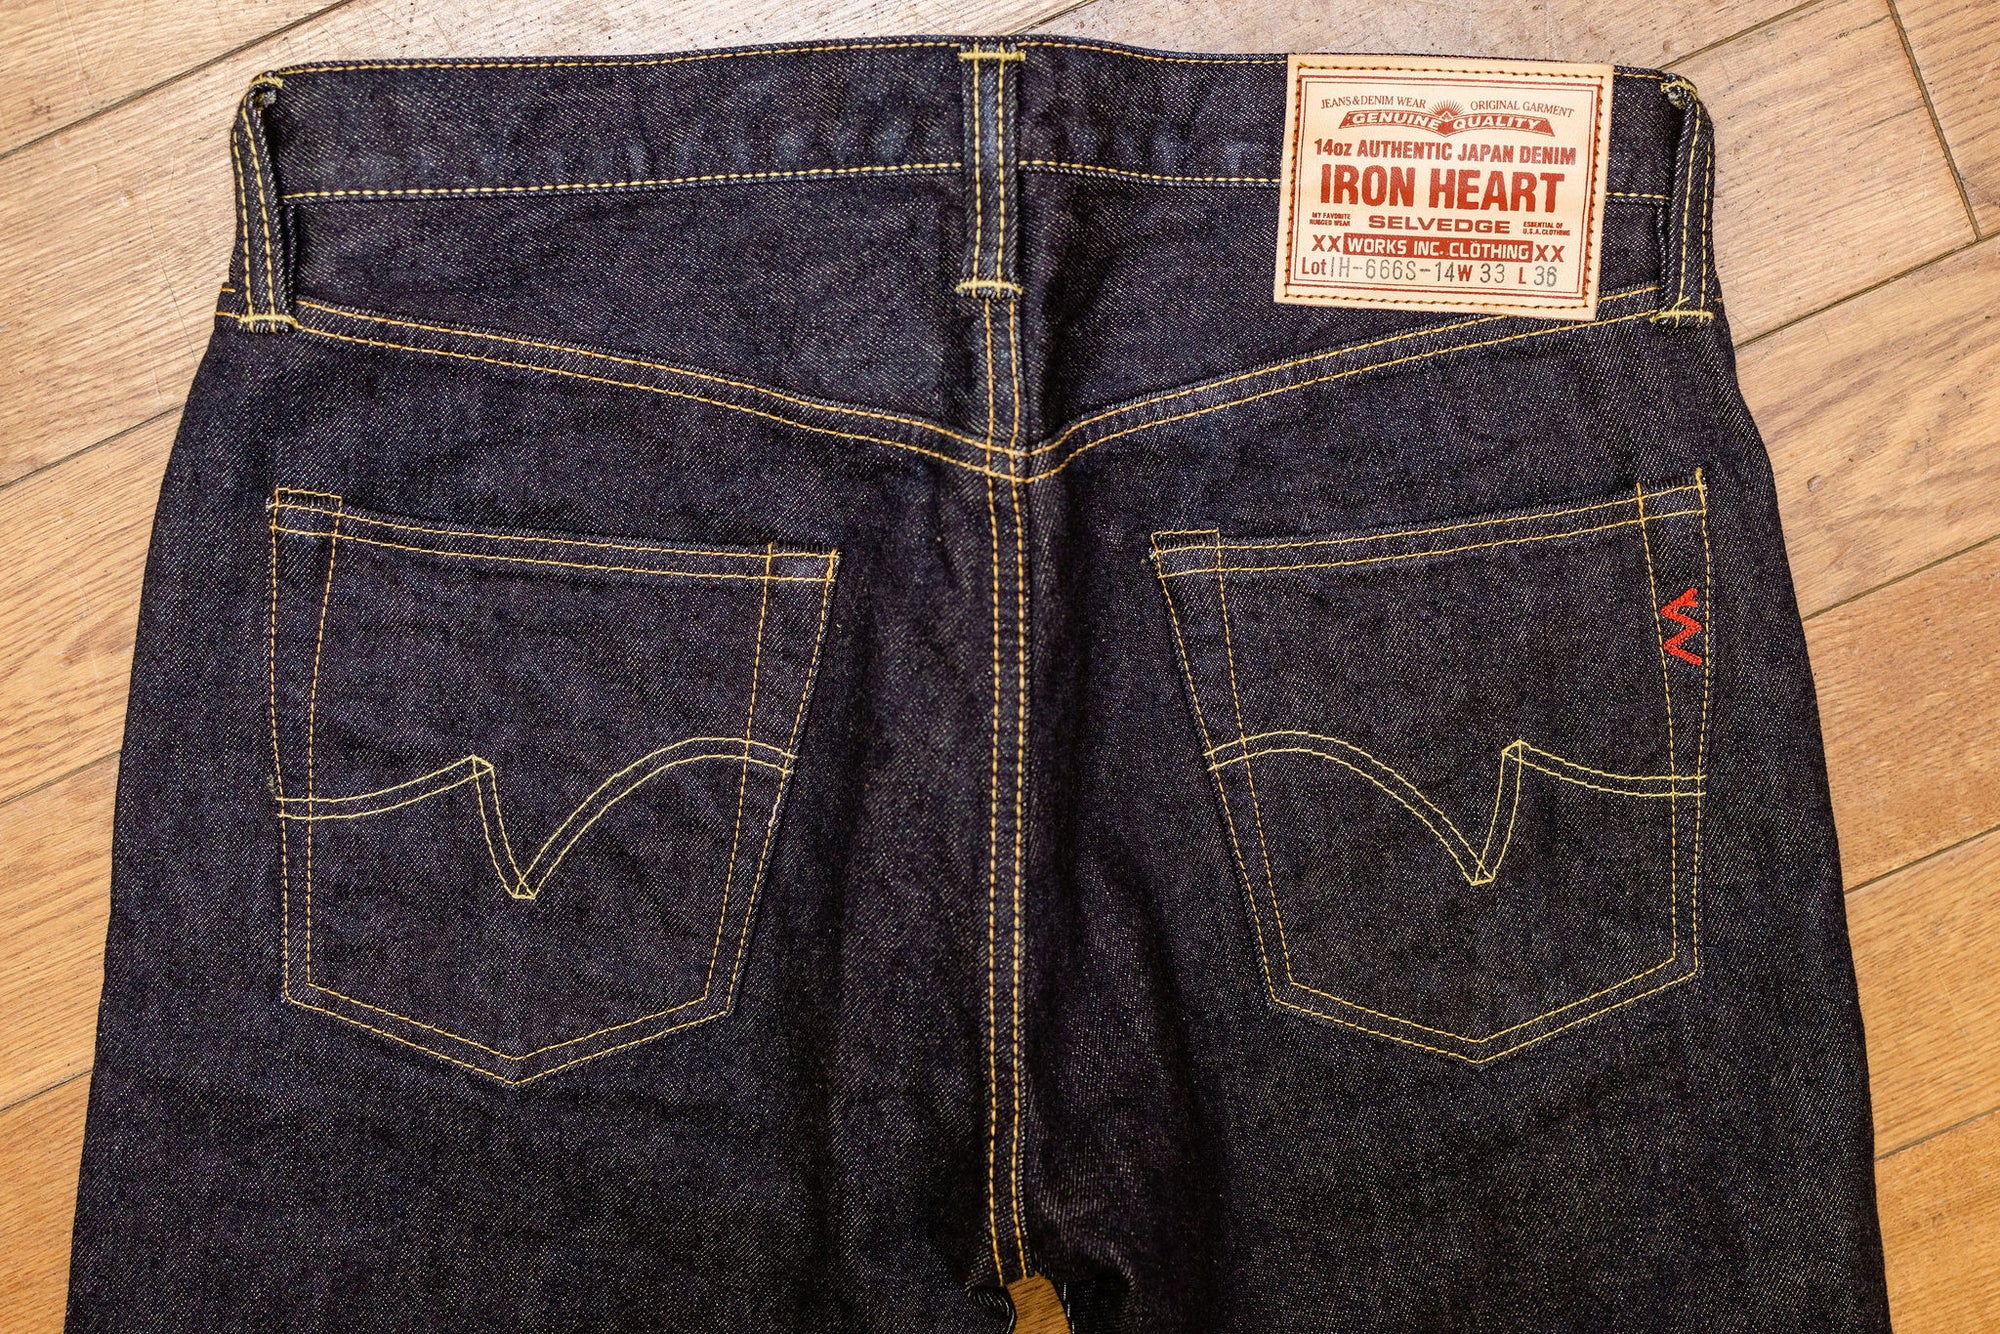 Iron Heart IH-666S-142 14oz Selvedge Denim Slim Straight Cut Jeans - Indigo